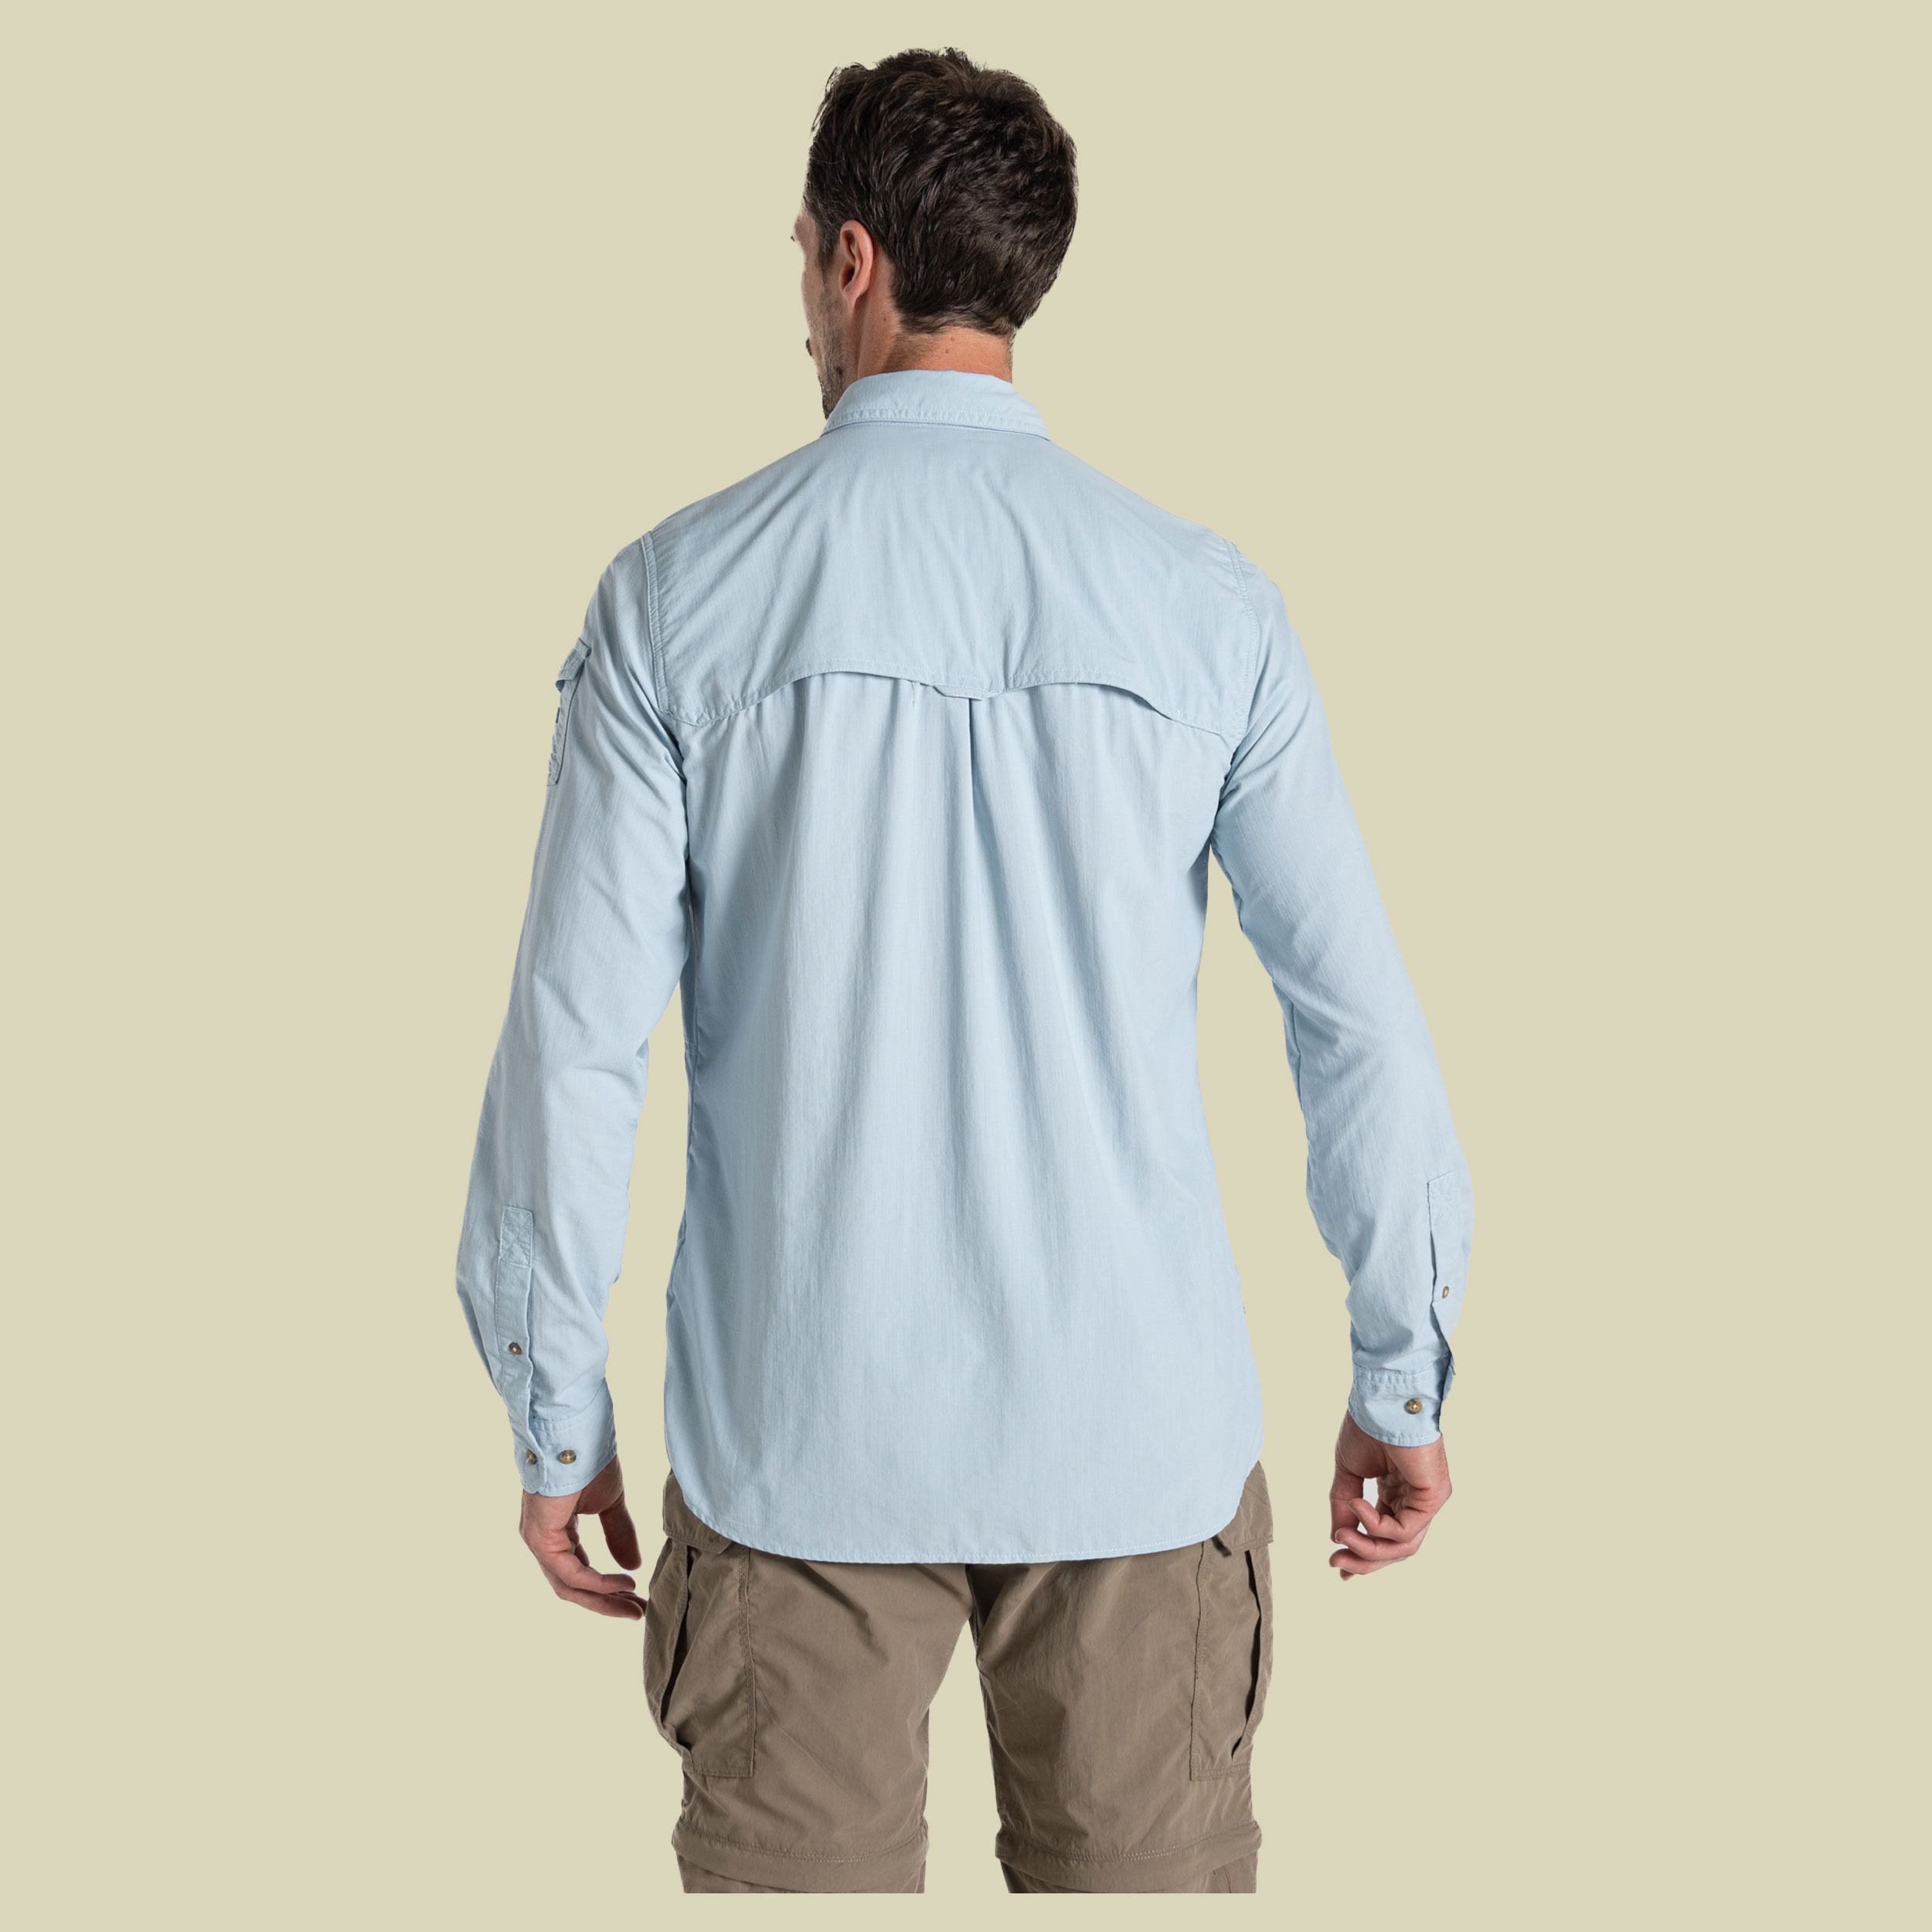 NosiLife Adventure Long Sleeved Shirt III Men M blau - niagra blue